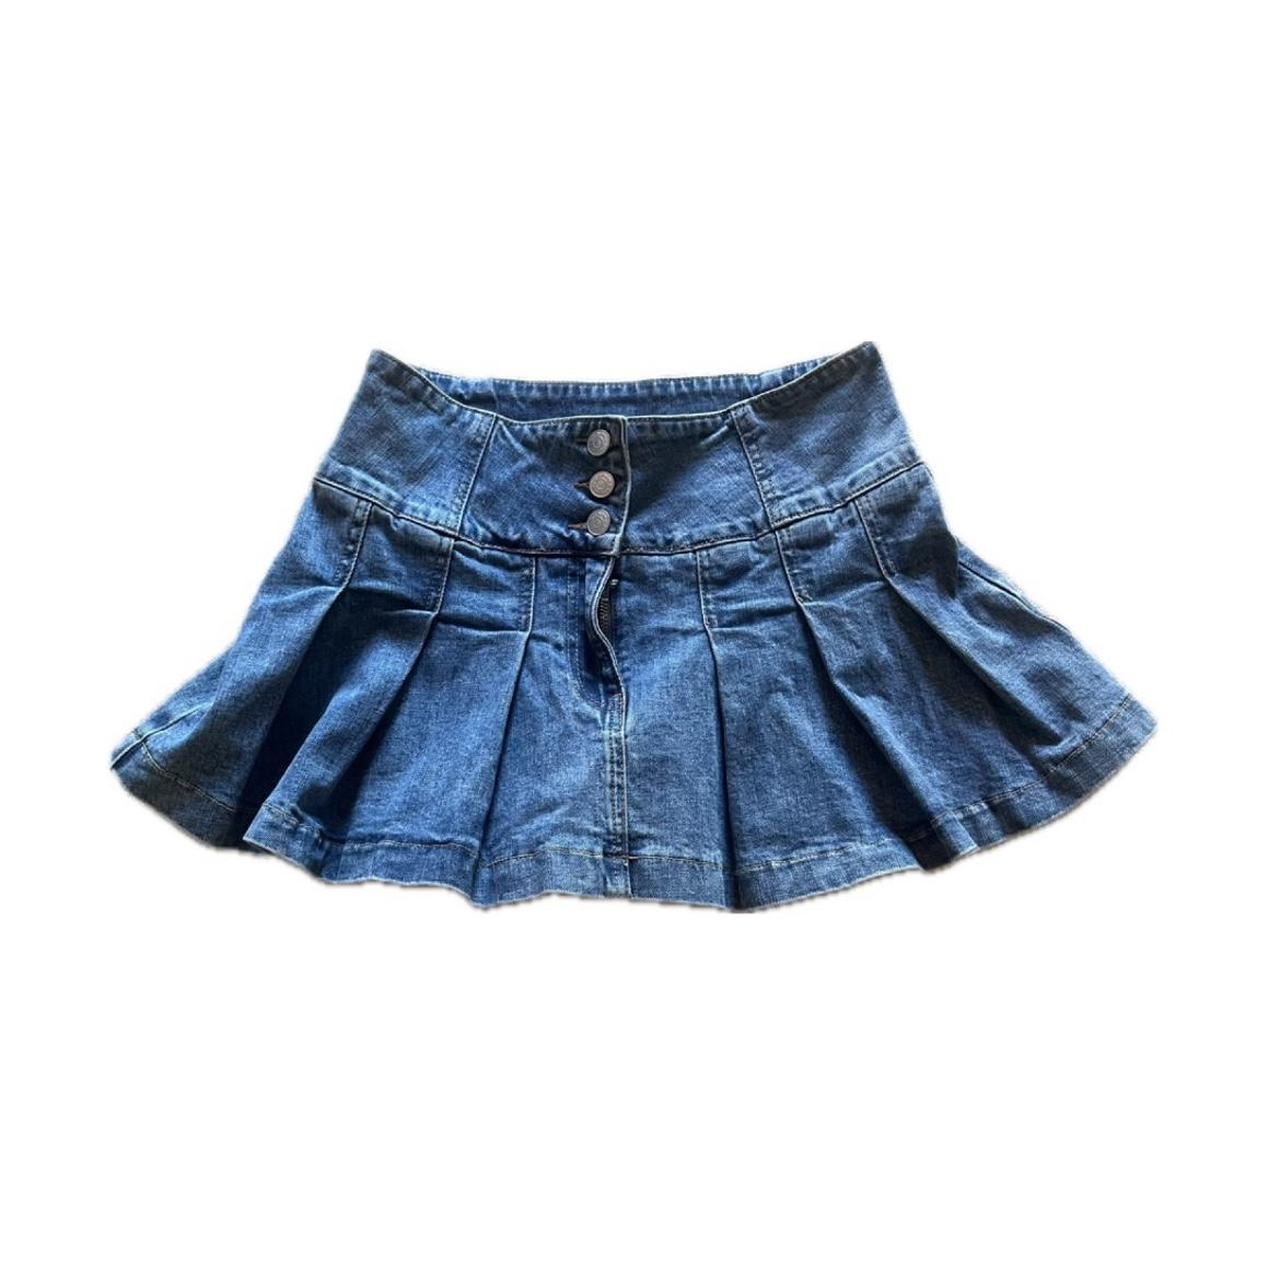 Glassons Denim Skirt #y2k #vintage #denim #denimskirt - Depop